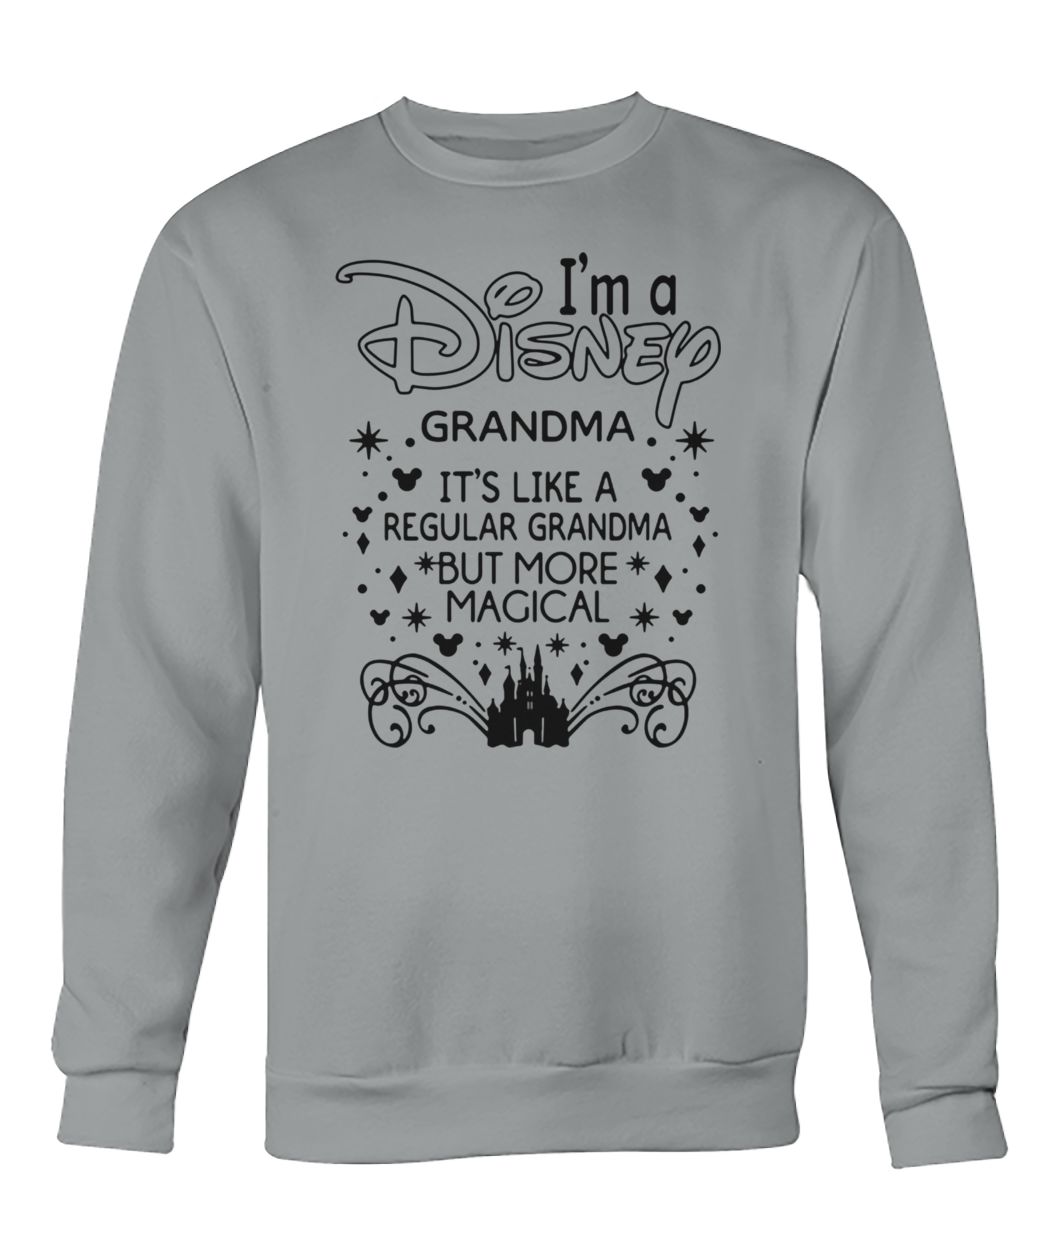 I’m disney grandma It’s like a regular grandma but with magical crew neck sweatshirt